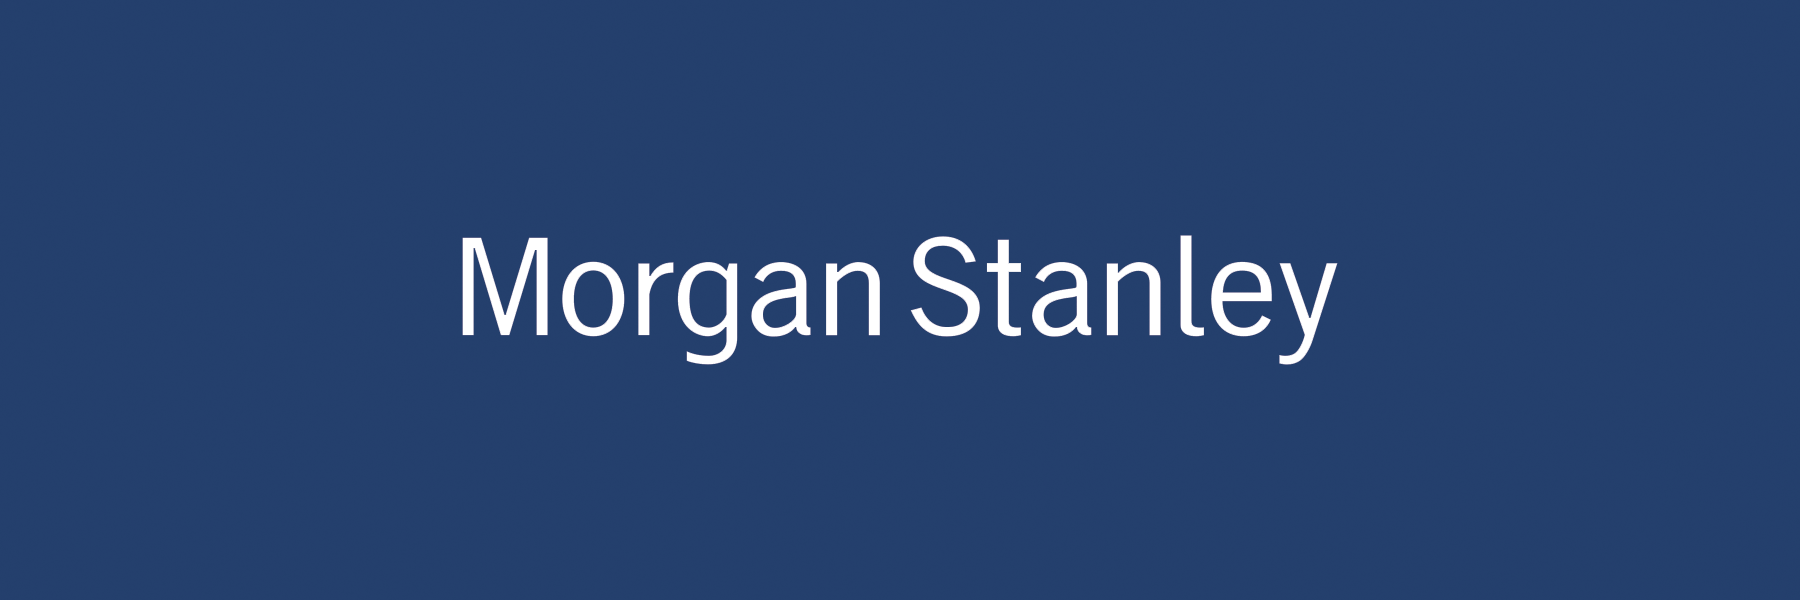 Morgan Stanley Logo - Morgan Stanley - PFSCCA